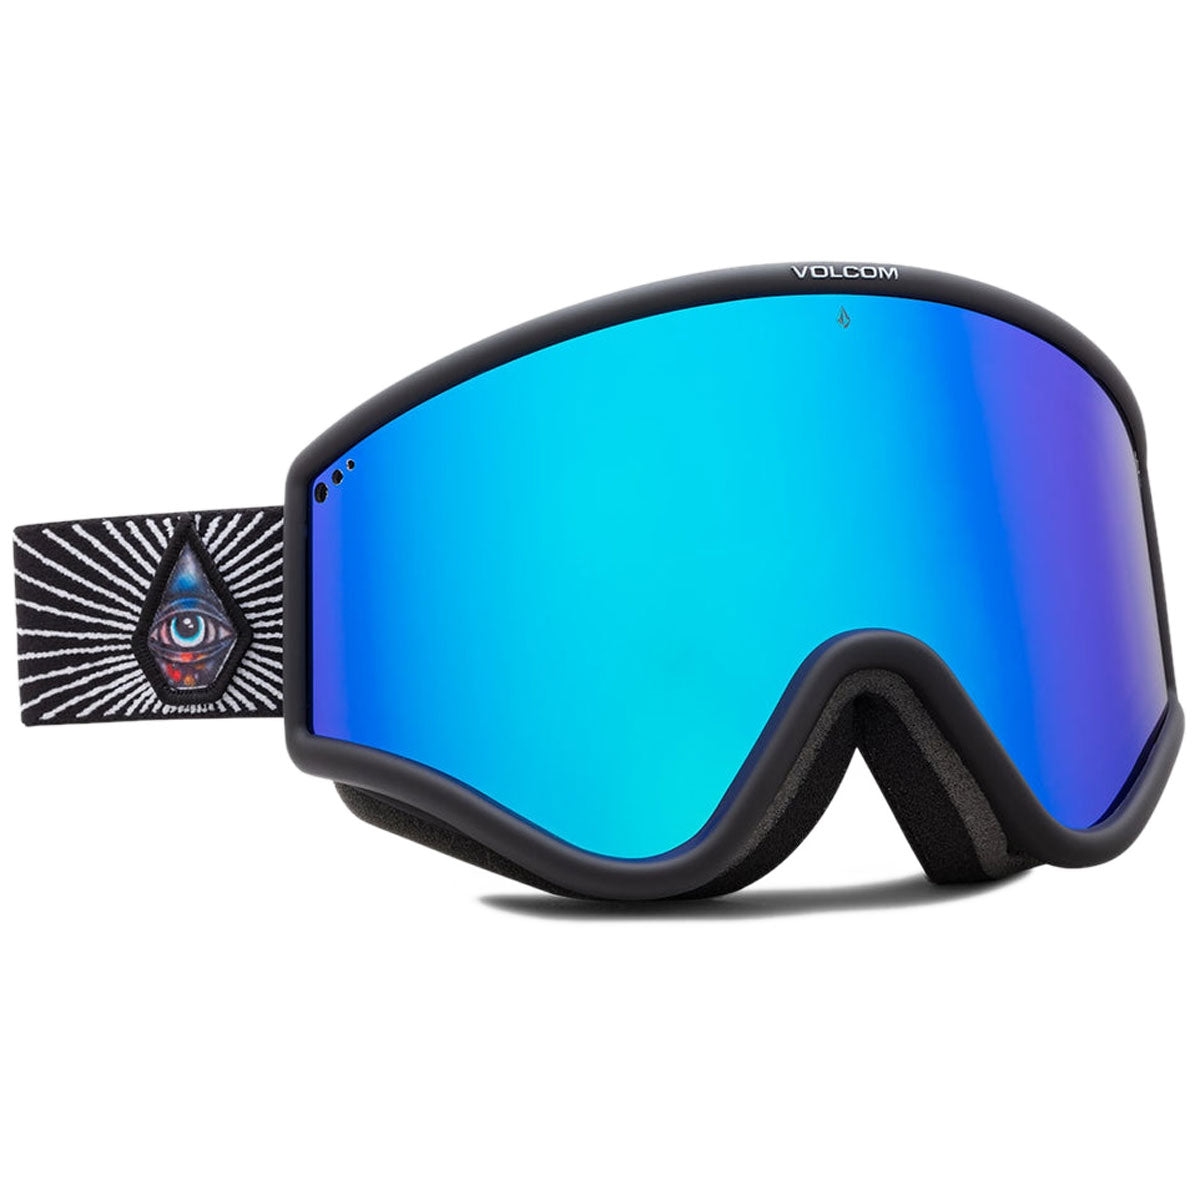 Volcom Yae Jamie Lynn Snowboard Goggles - Blue Chrome image 3